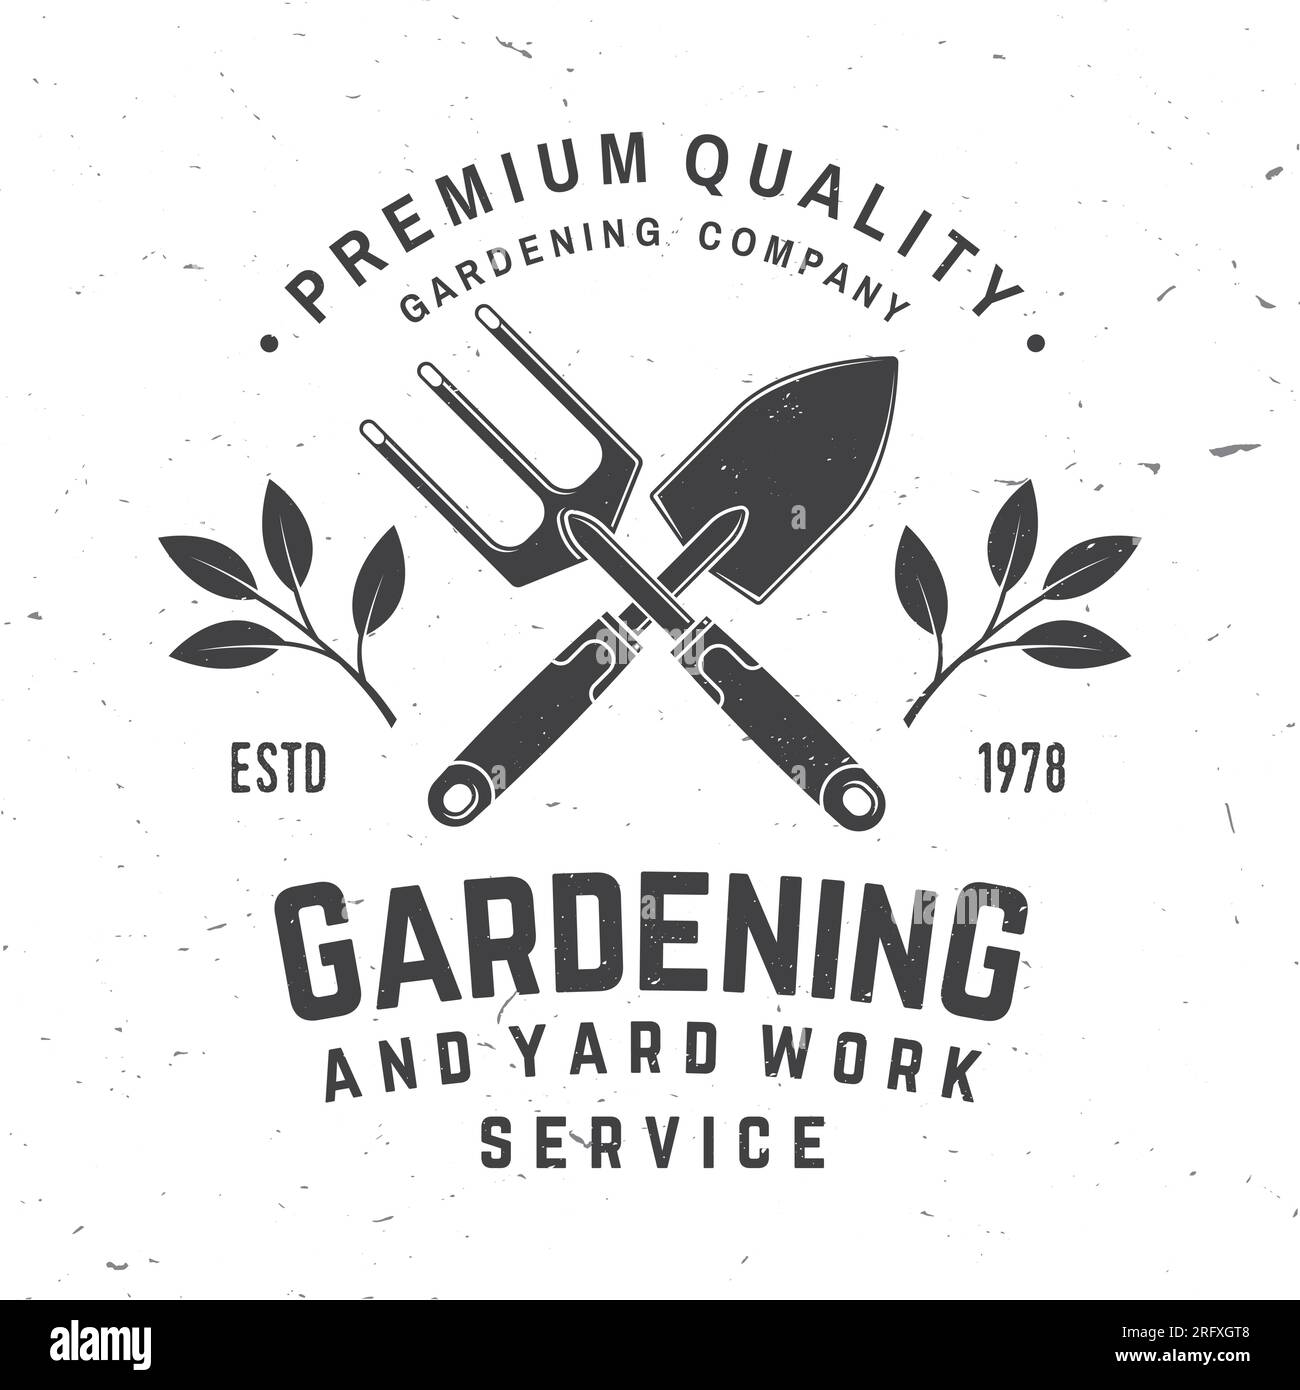 Gardening and yard work services emblem, label, badge, logo. Vector illustration. For sign, patch, shirt design with hand garden trowel, farming fork Stock Vector